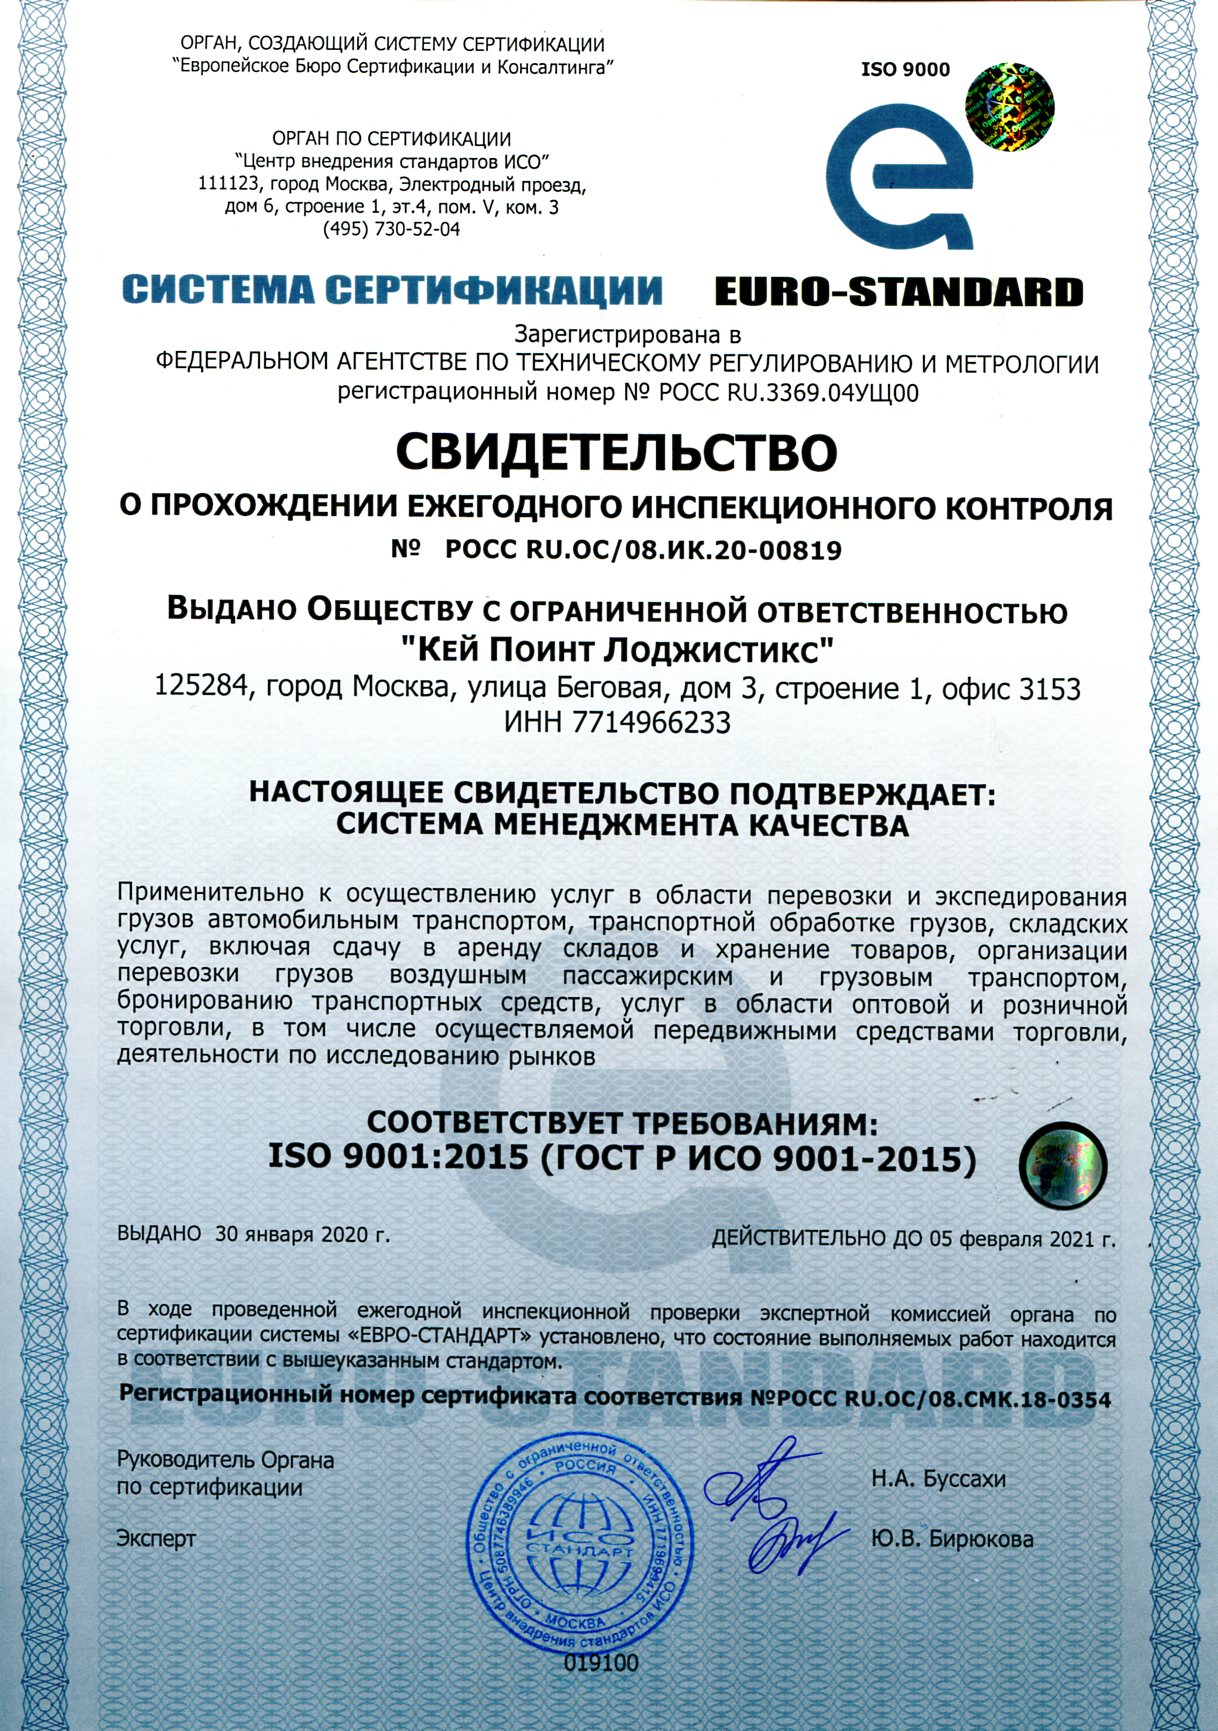 ISO9000Key_Point_Logistics_IK2